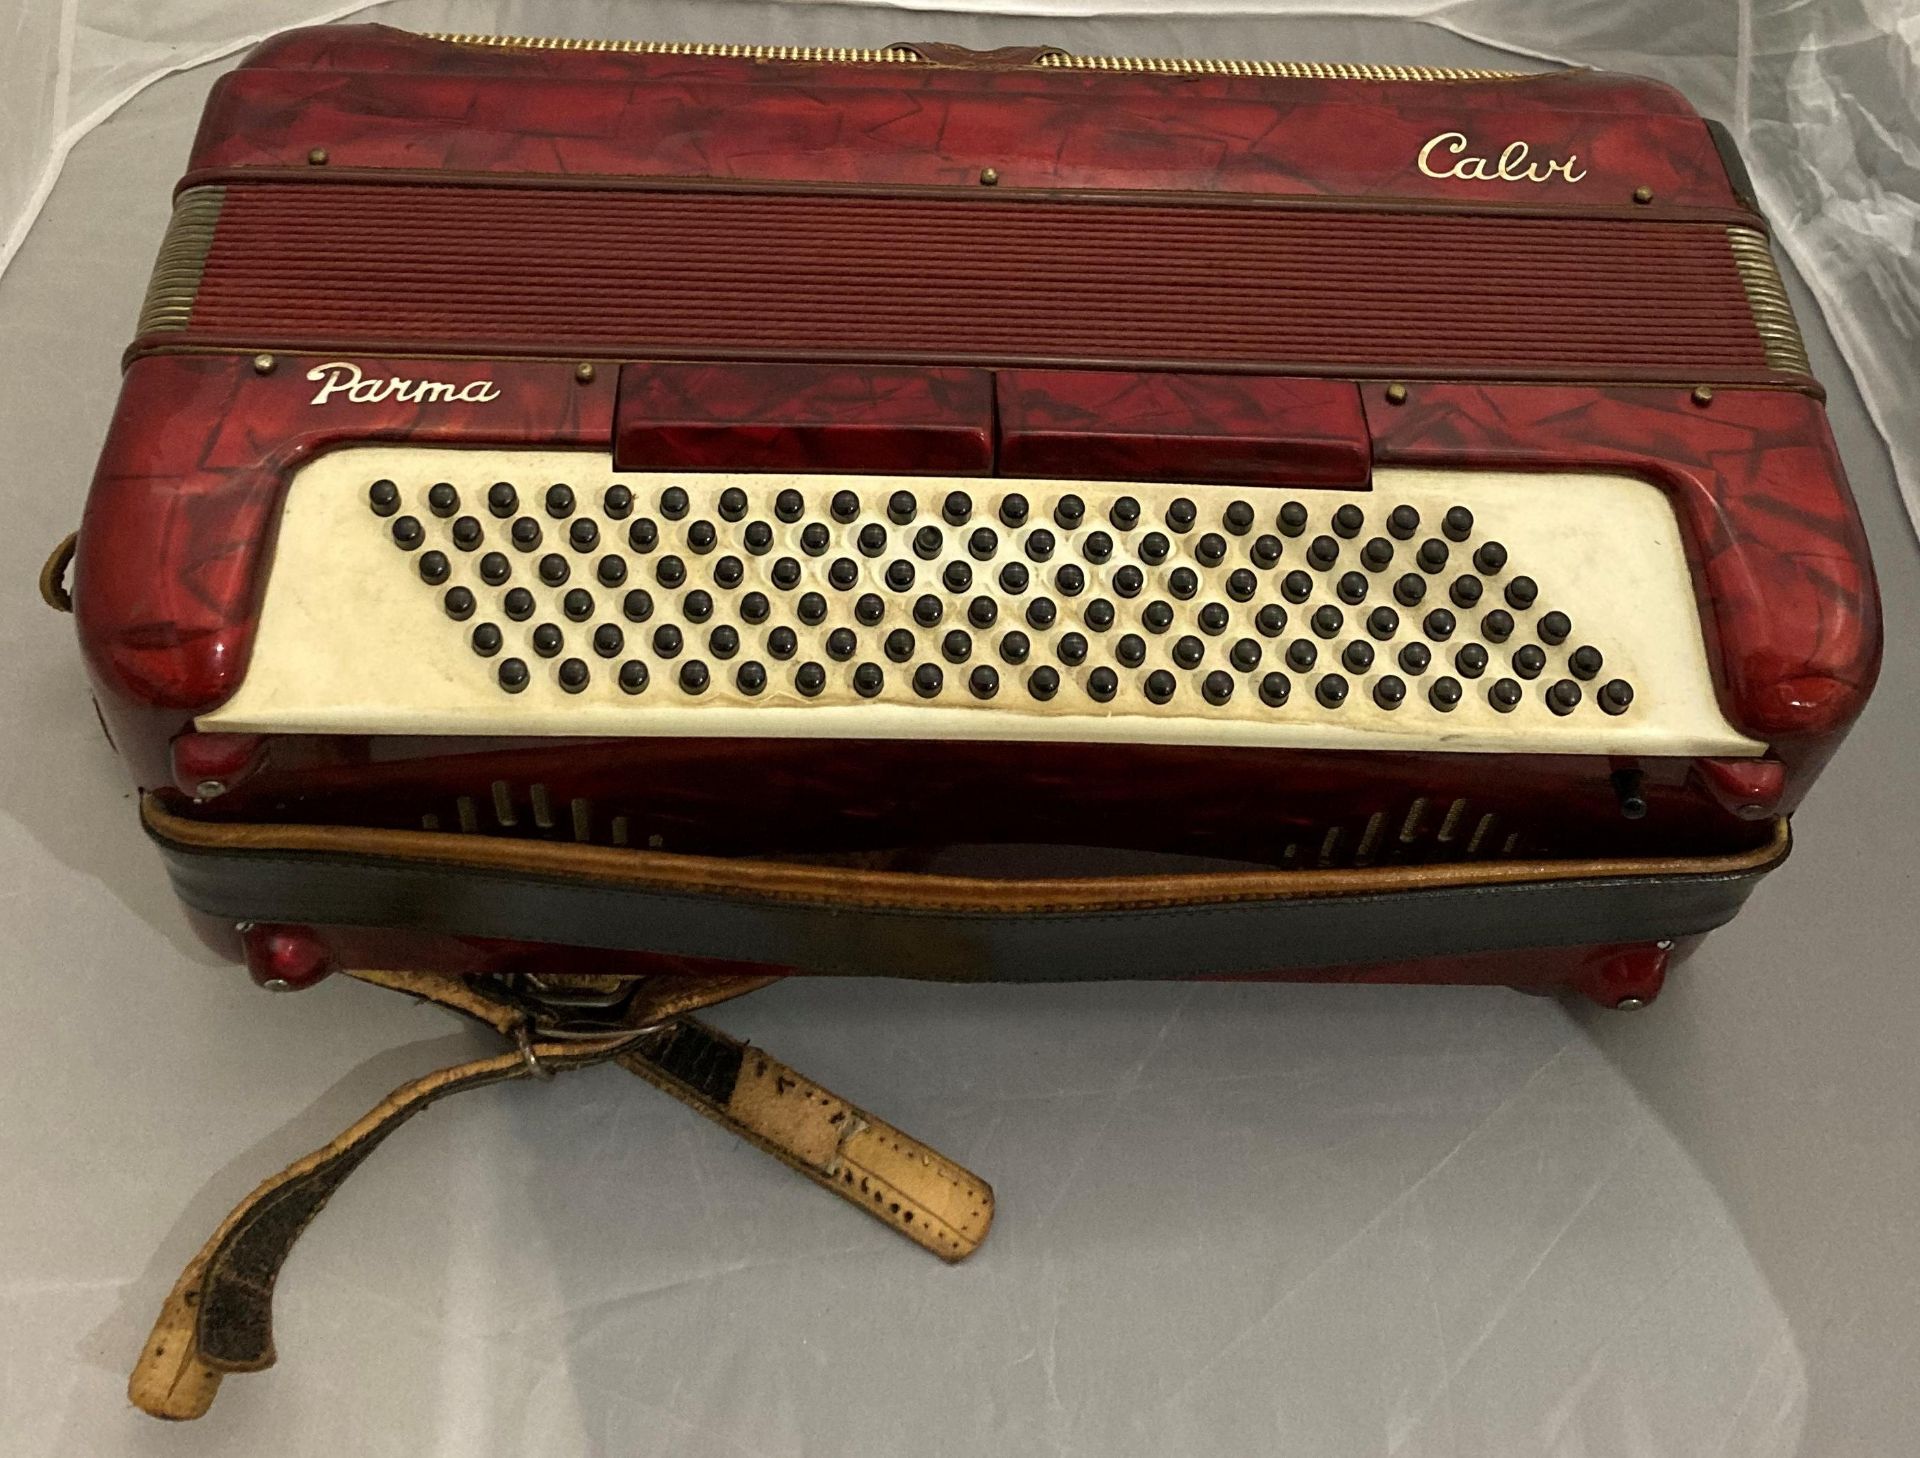 Calvi Parma vintage accordion in deep red in an original hard carrying case (Saleroom location: S3) - Image 3 of 6